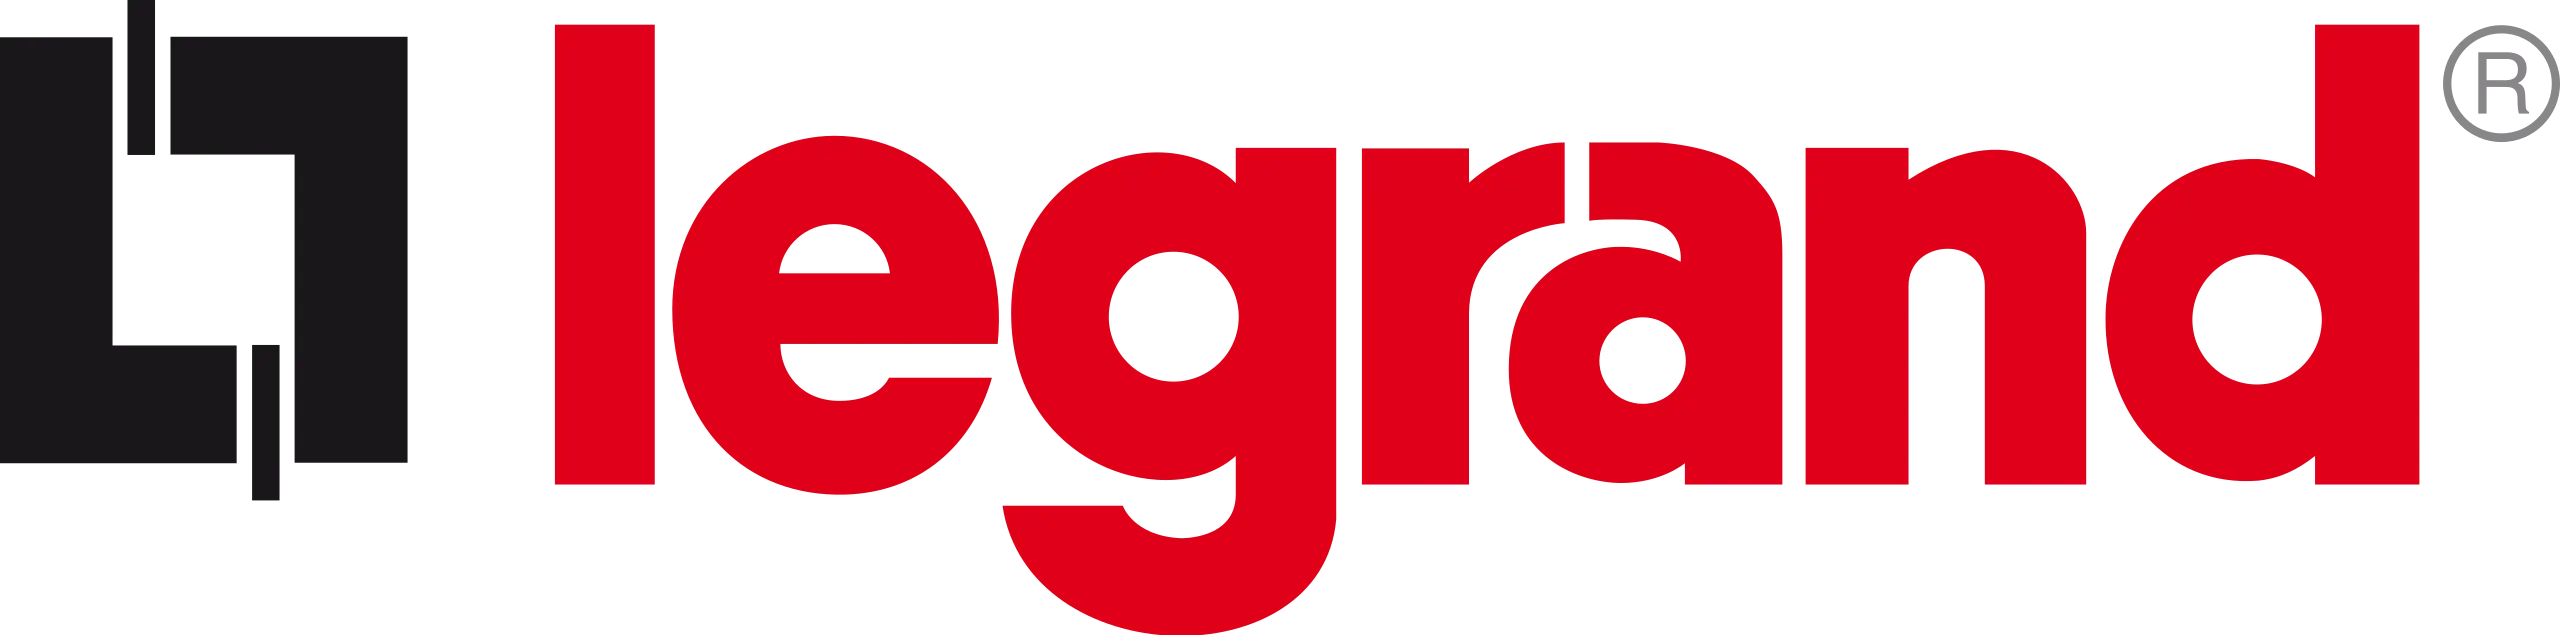 Abandoned Cart Email for Magento 2 | Legrand logo